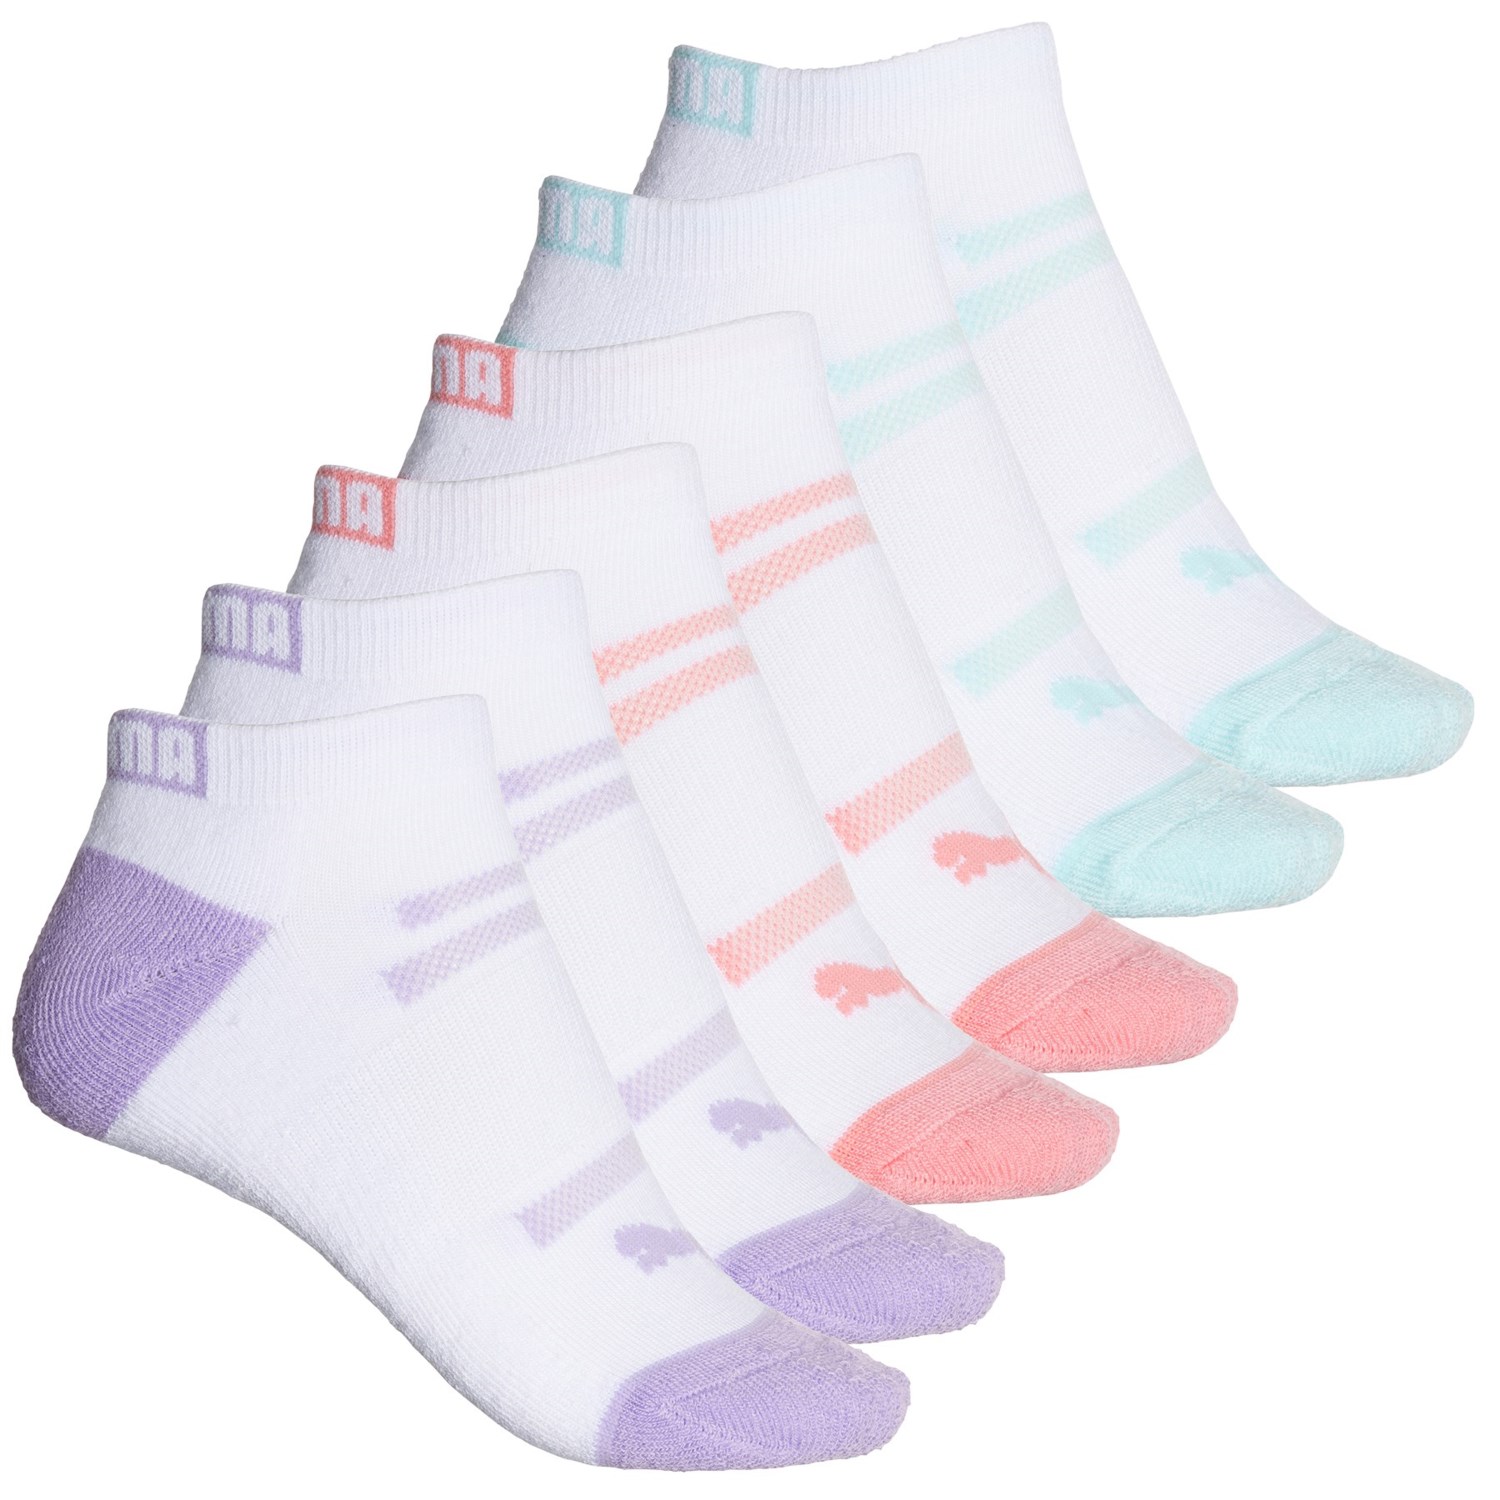 () v[} fB[X n[t NbV e[ [Jbg X|[c g[jO \bNX Puma women Half Cushion Terry Low-Cut Sport Training Socks (For Women) White/Multi